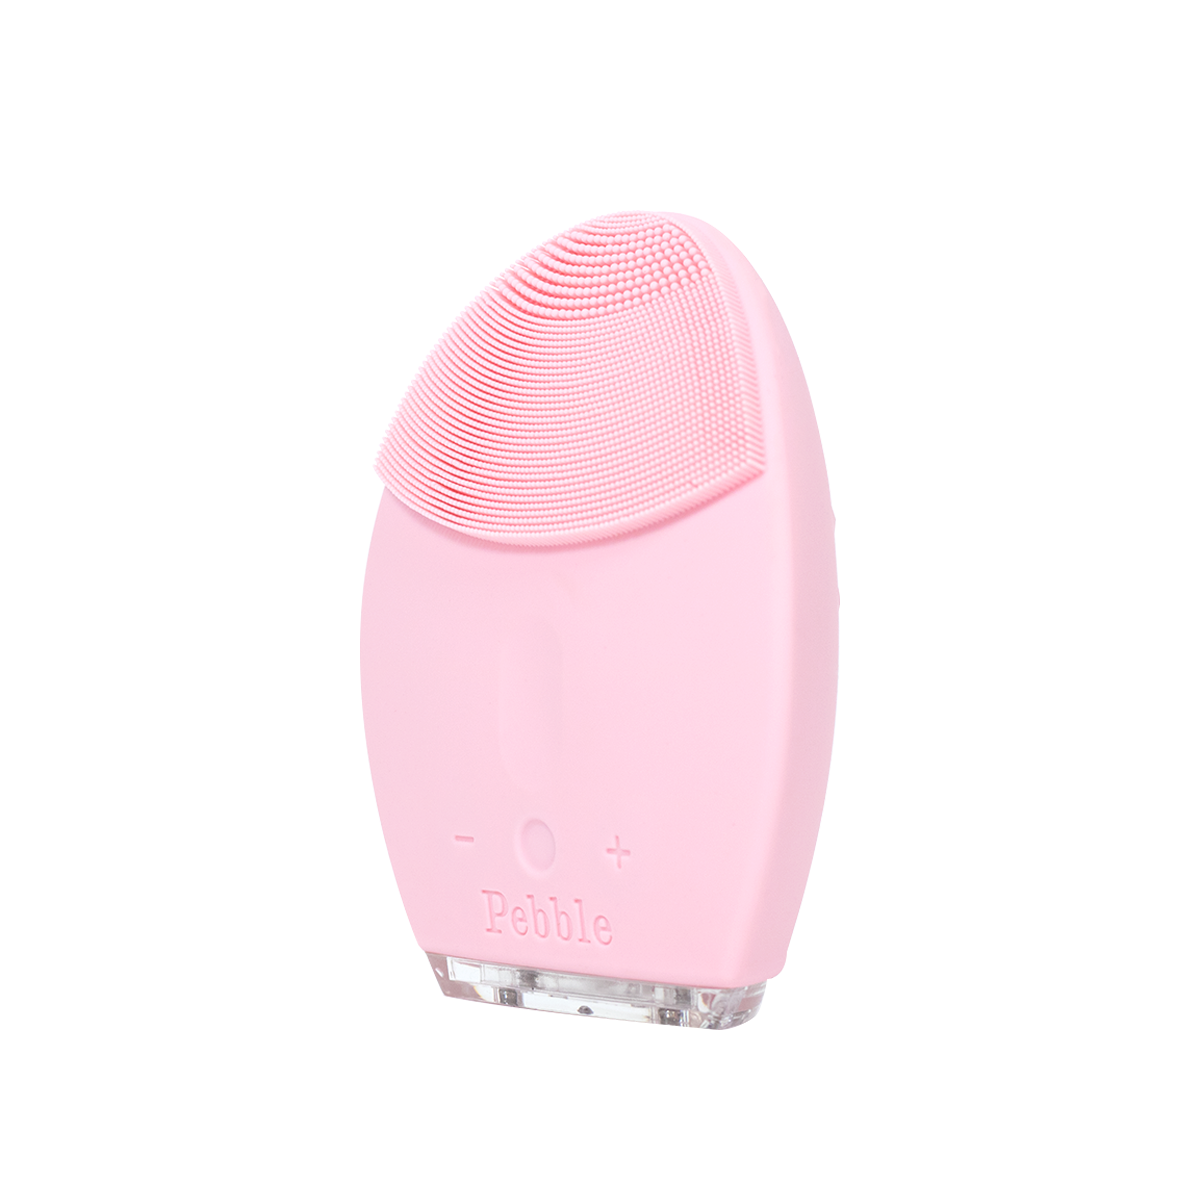 Máy rửa mặt Silicon Pebble Lisa face washing machine (Paper Pink) Gen 5